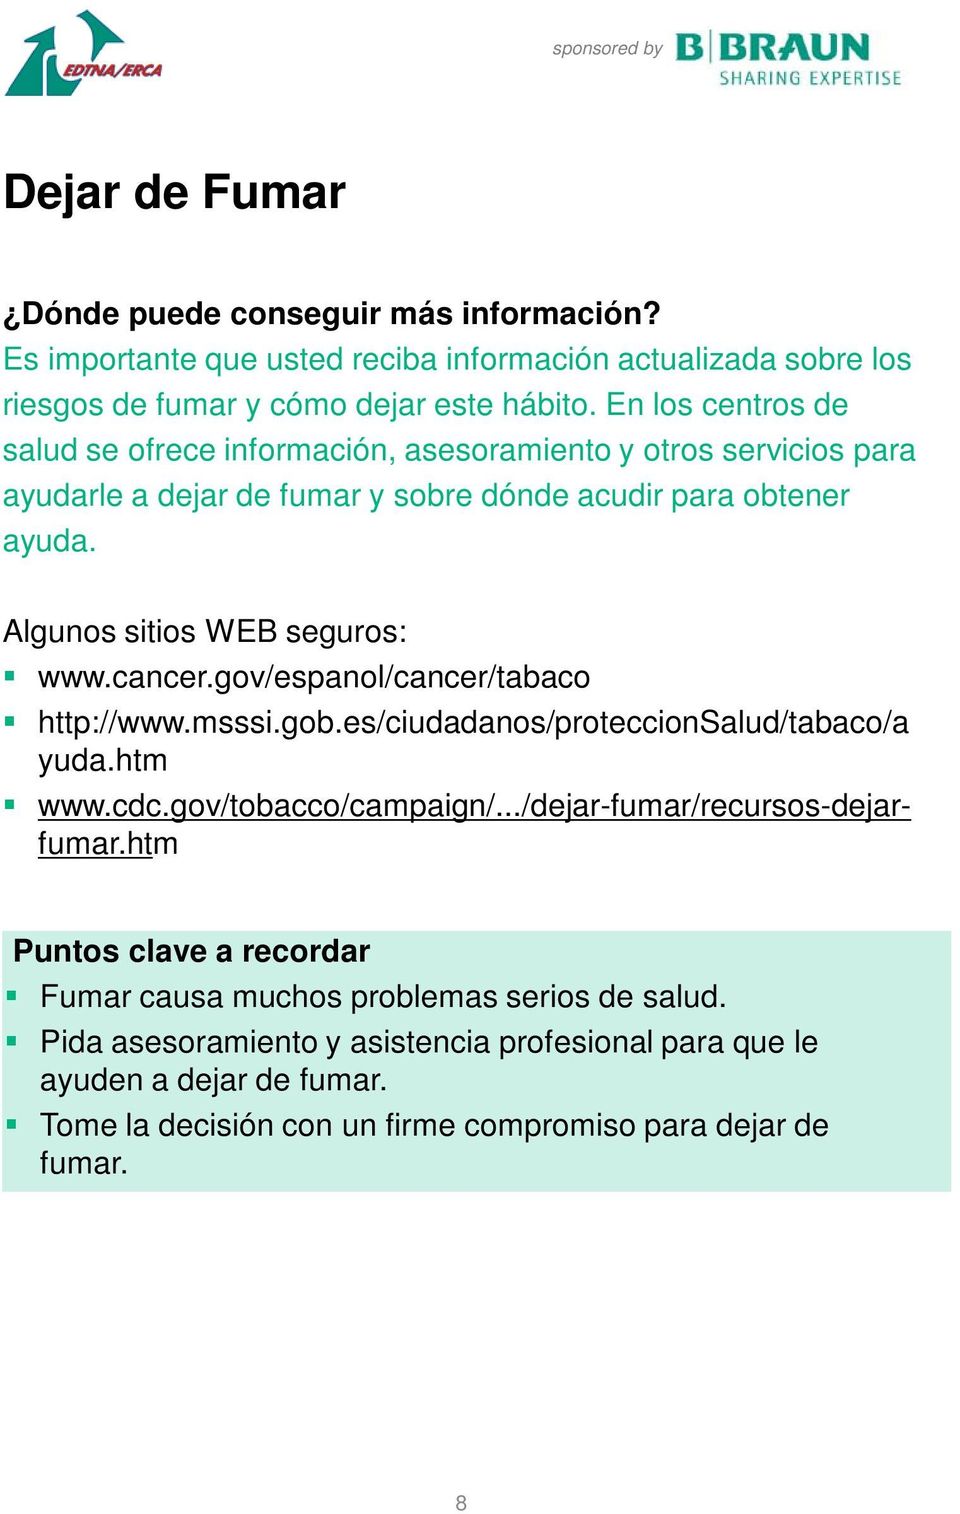 Algunos sitios WEB seguros: www.cancer.gov/espanol/cancer/tabaco http://www.msssi.gob.es/ciudadanos/proteccionsalud/tabaco/a yuda.htm www.cdc.gov/tobacco/campaign/.